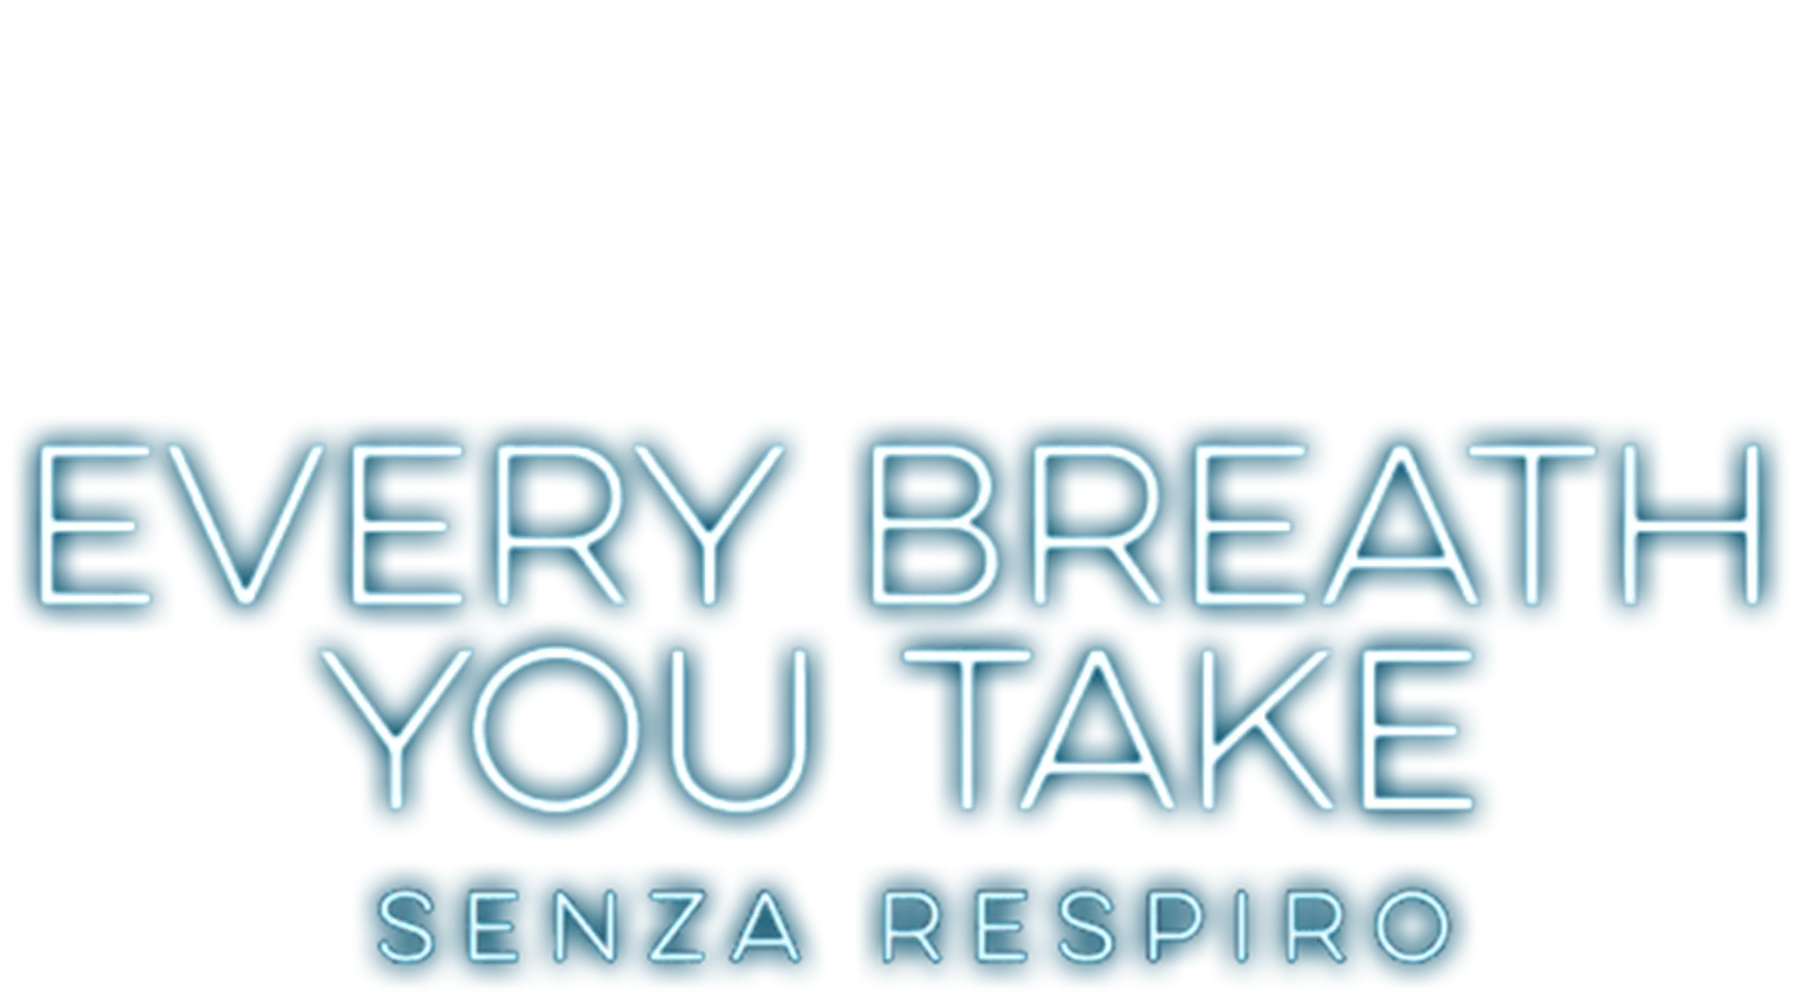 Every Breath You Take - Senza respiro